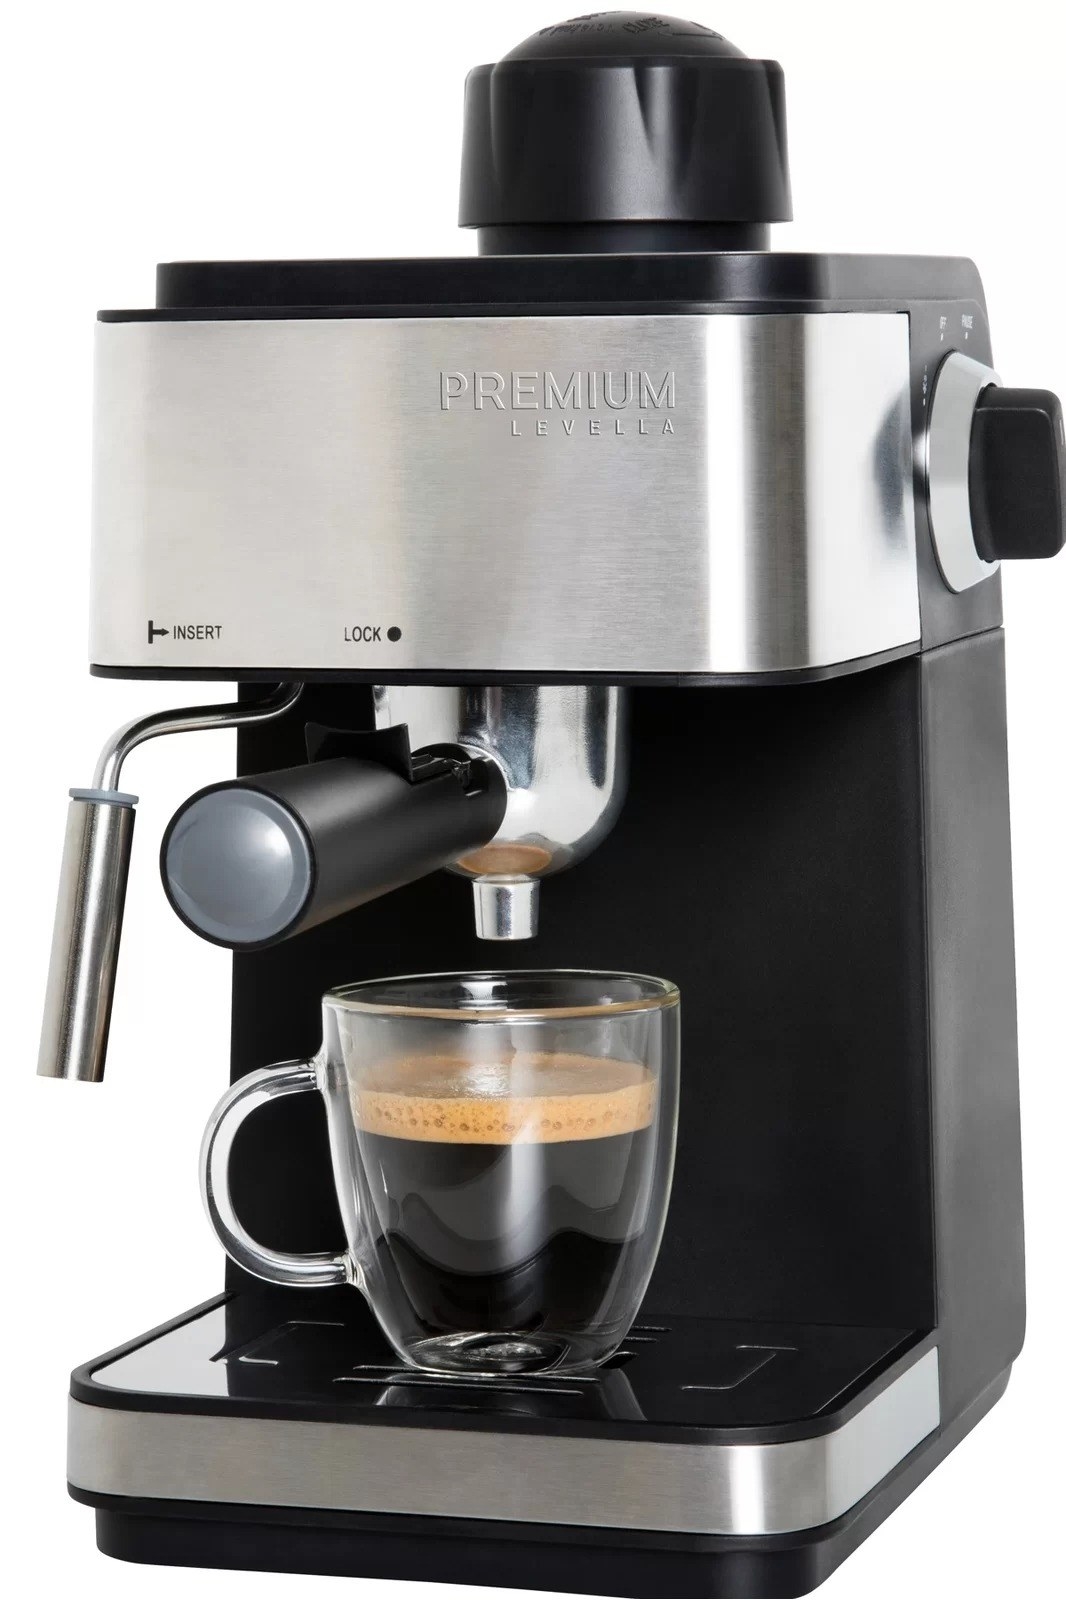 black espresso machine brewing a cup of espresso in a glass container